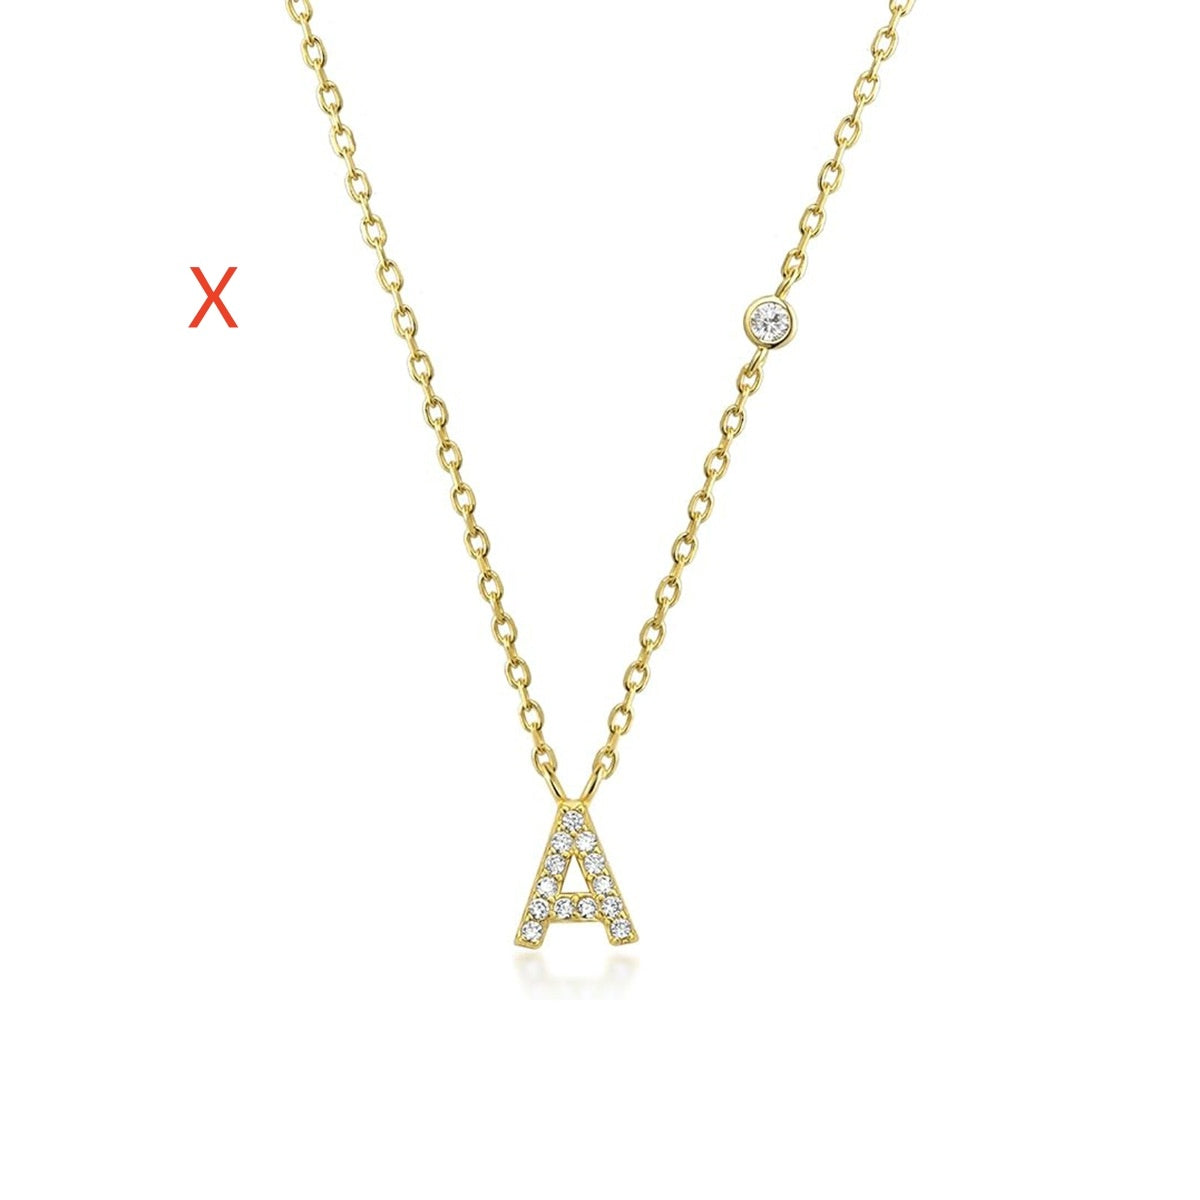 Fashion Jewelry Luxury Gold Color A-Z 26 Letters Necklace CZ Pendant